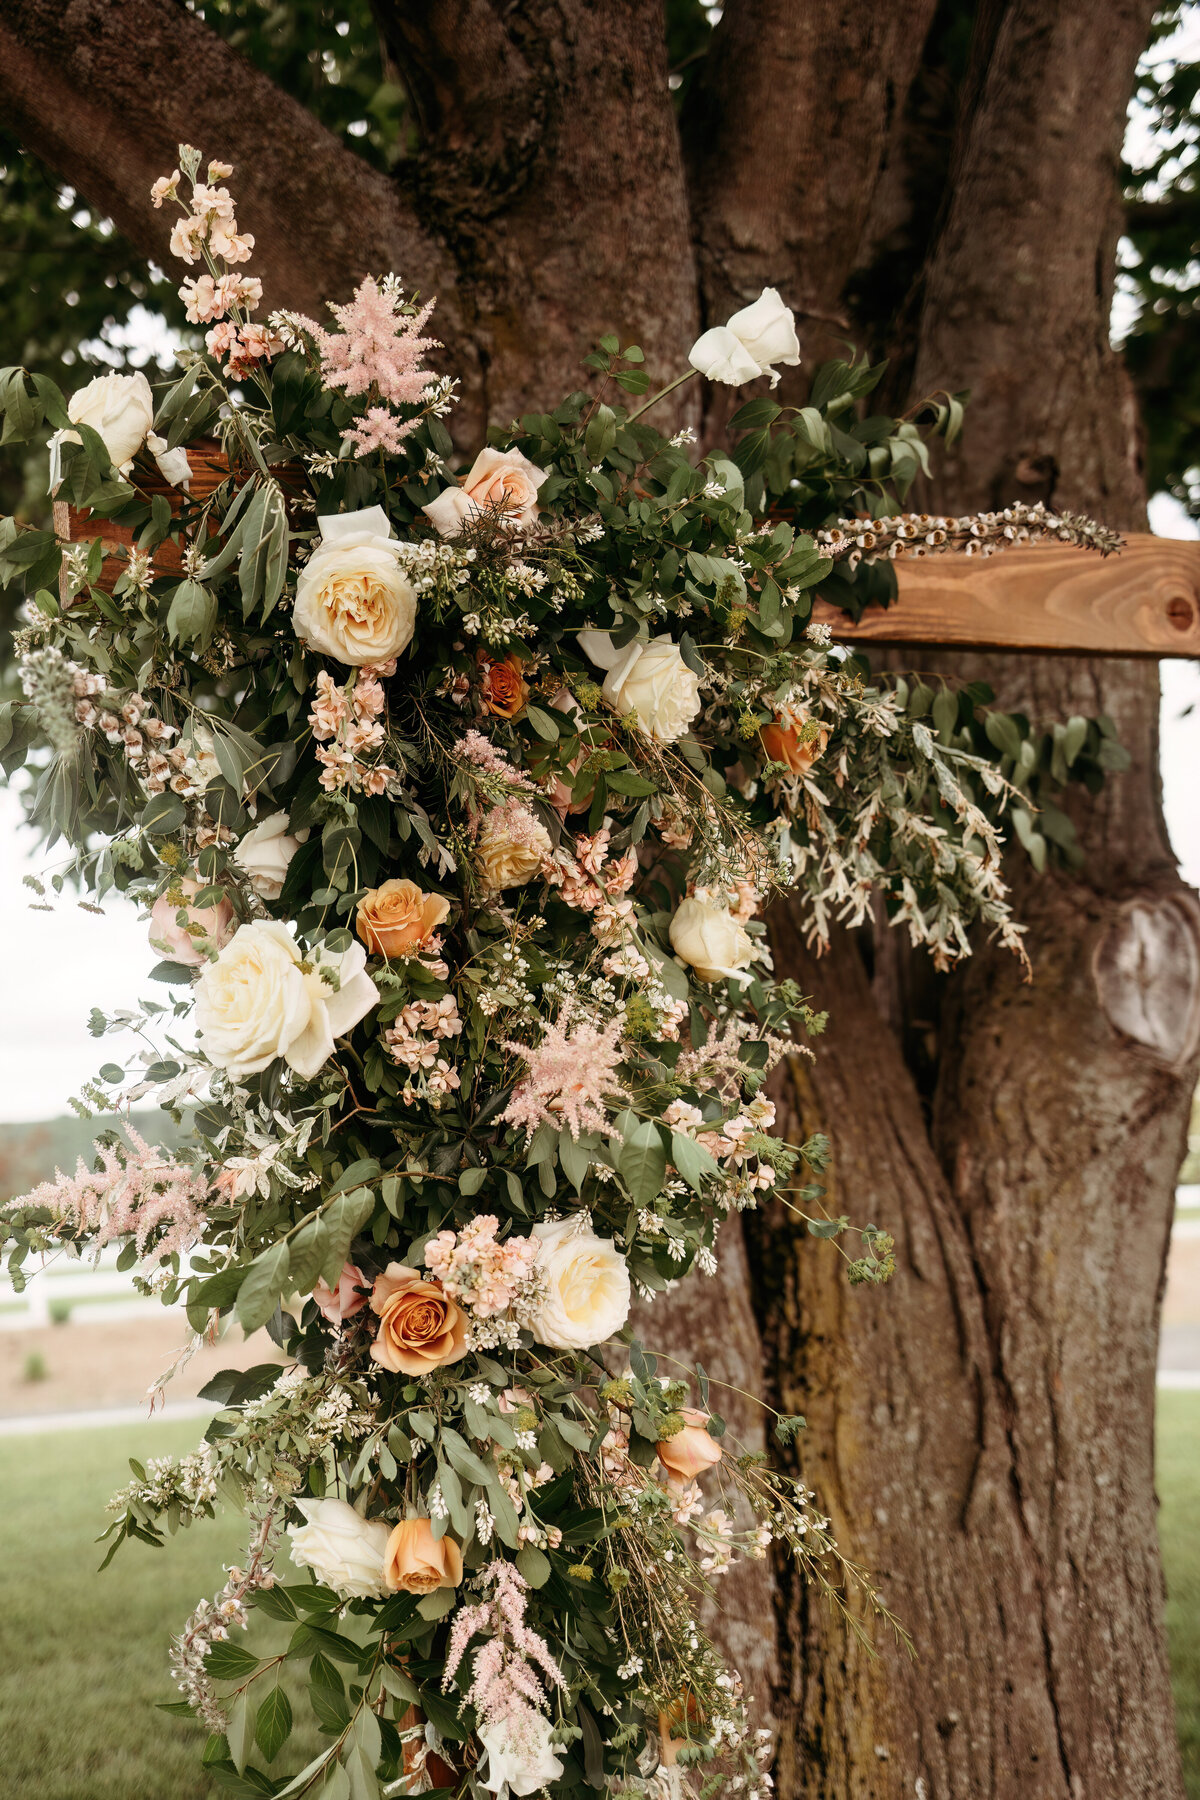 raymond-farm-new-hartford-ct-wedding-flowers-ceremony-arch-petals-plates-3